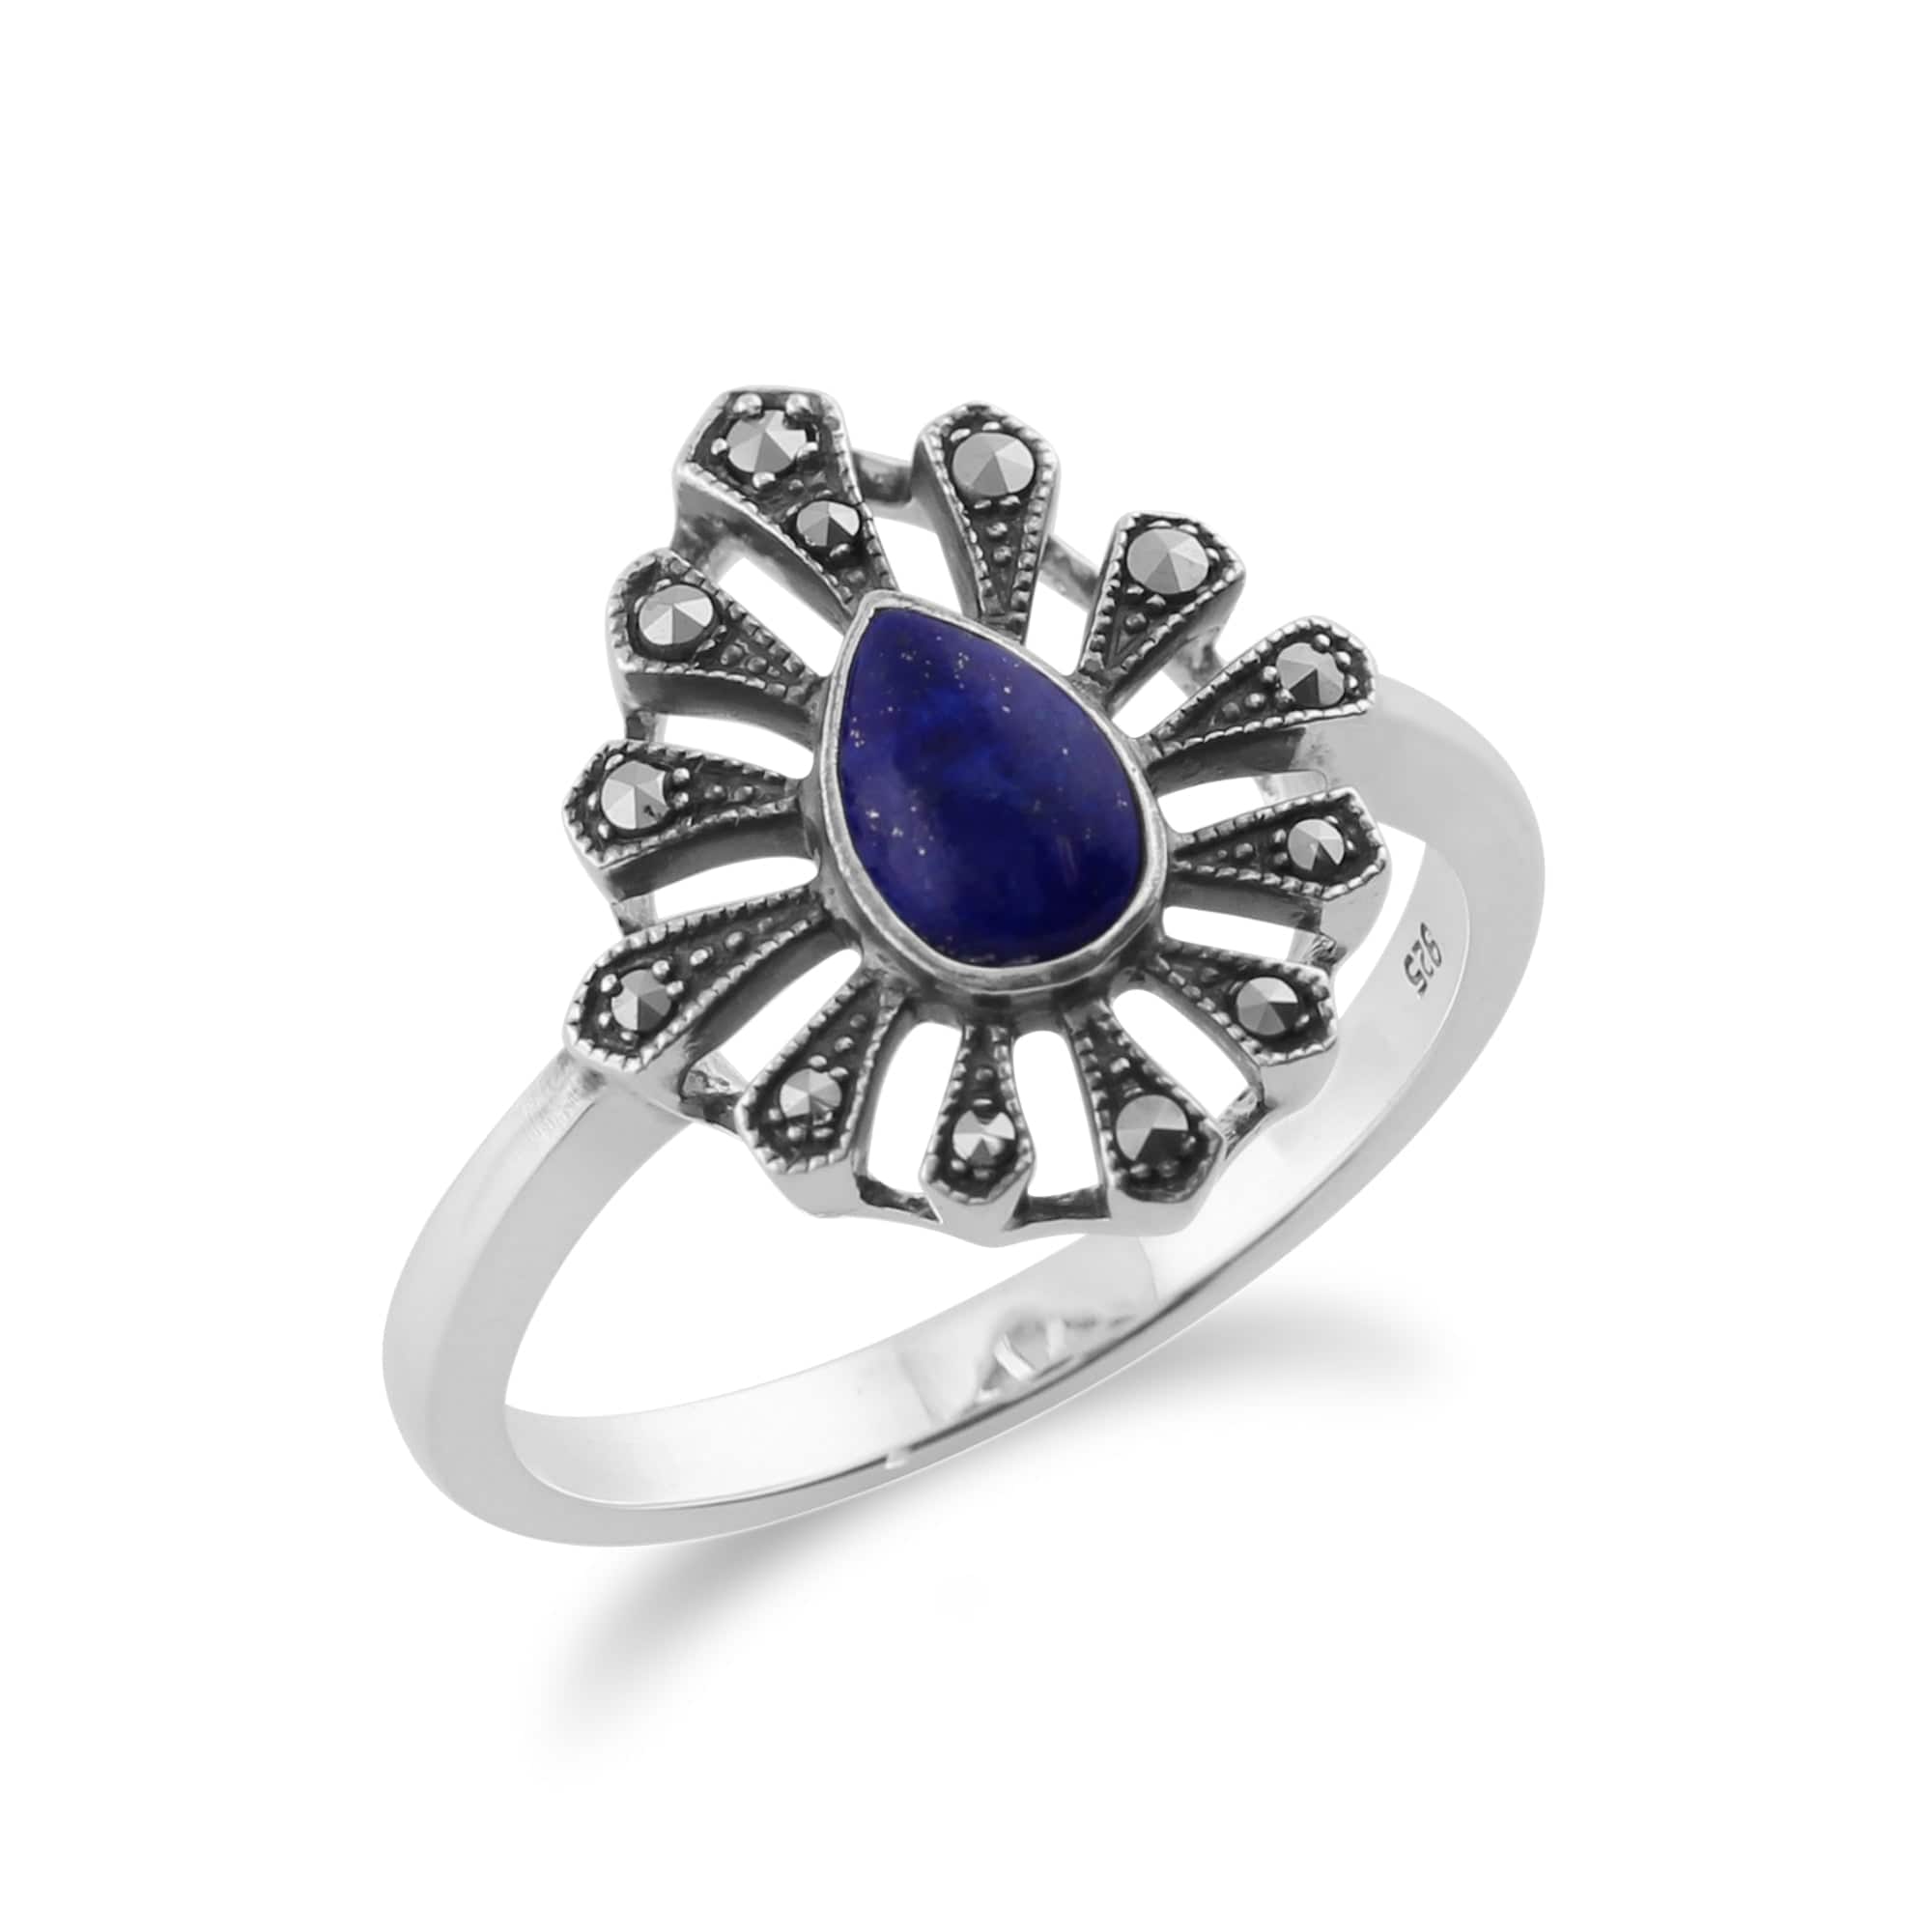 Gemondo 925 Sterling Silver 0.30ct Lapis Lazuli & Marcasite Art Deco Ring Image 2